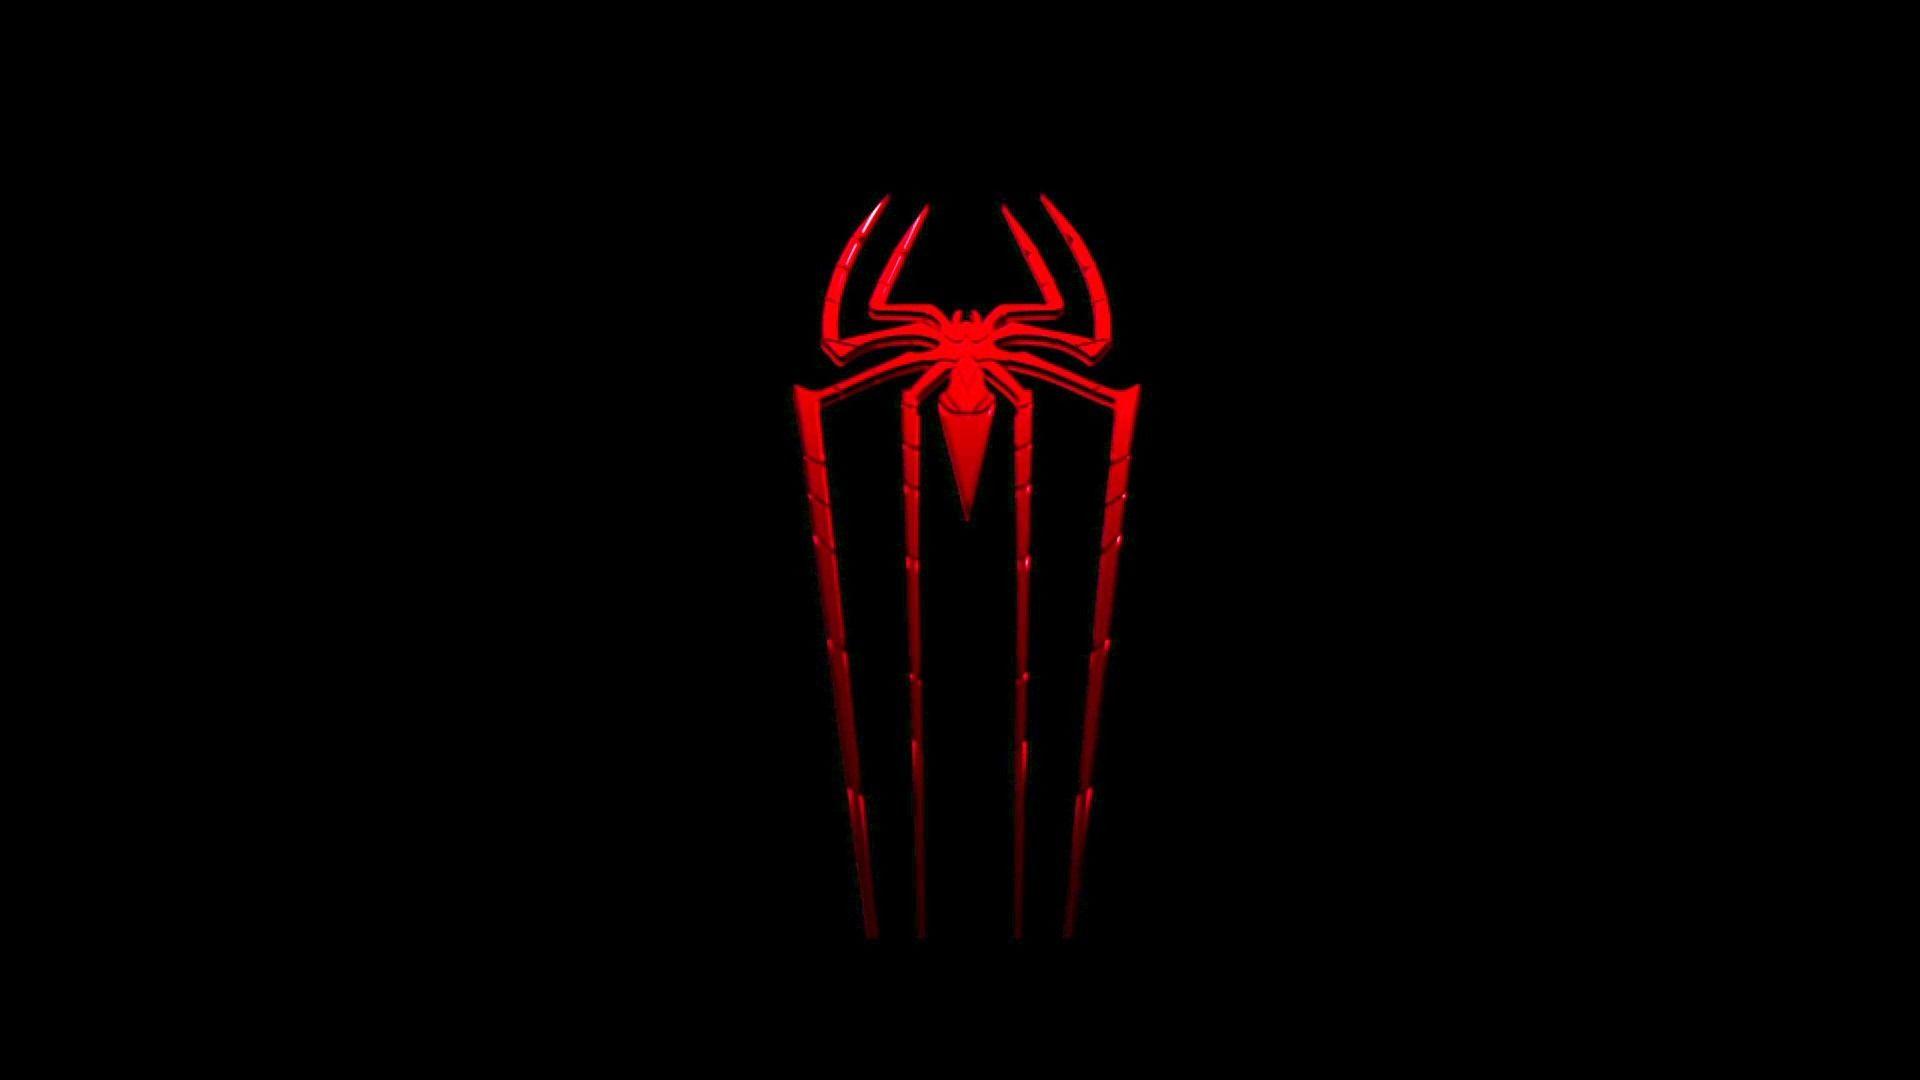 Black Spiderman Logo Cool Wallpaper. I HD Image